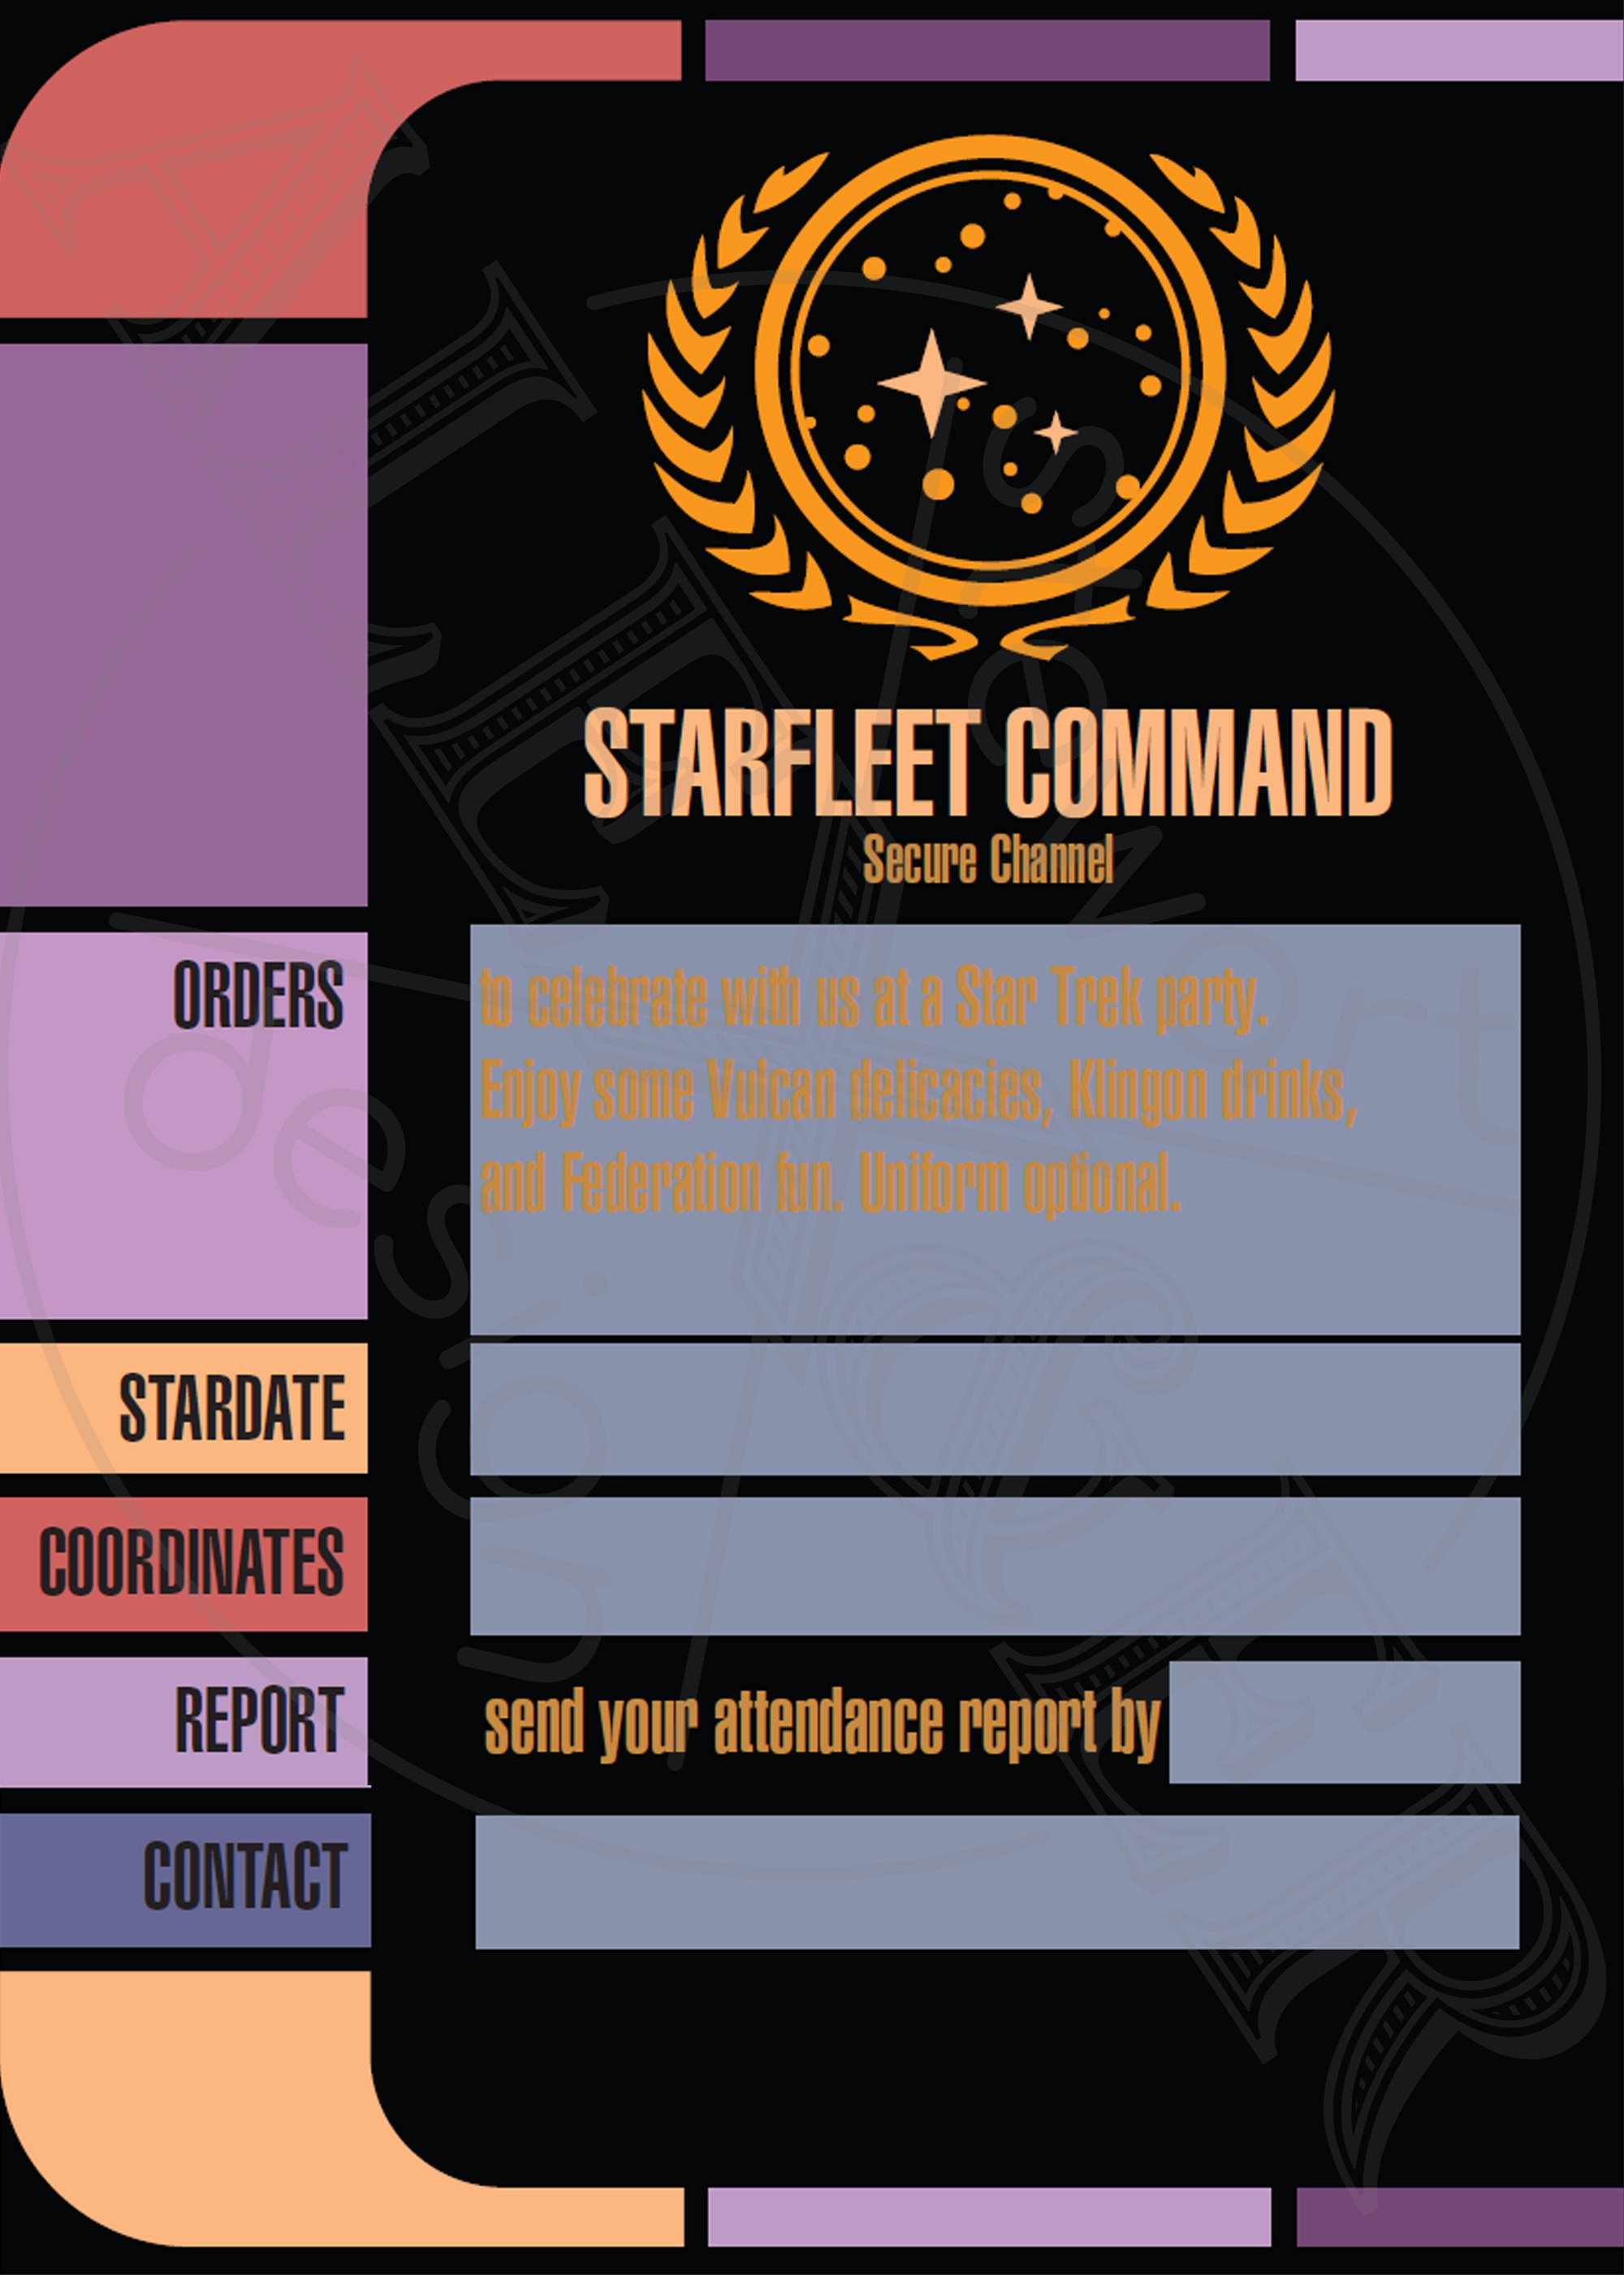 5x7 Star Trek-inspired Starfleet LCARS Missive Party Invitation Multi ...